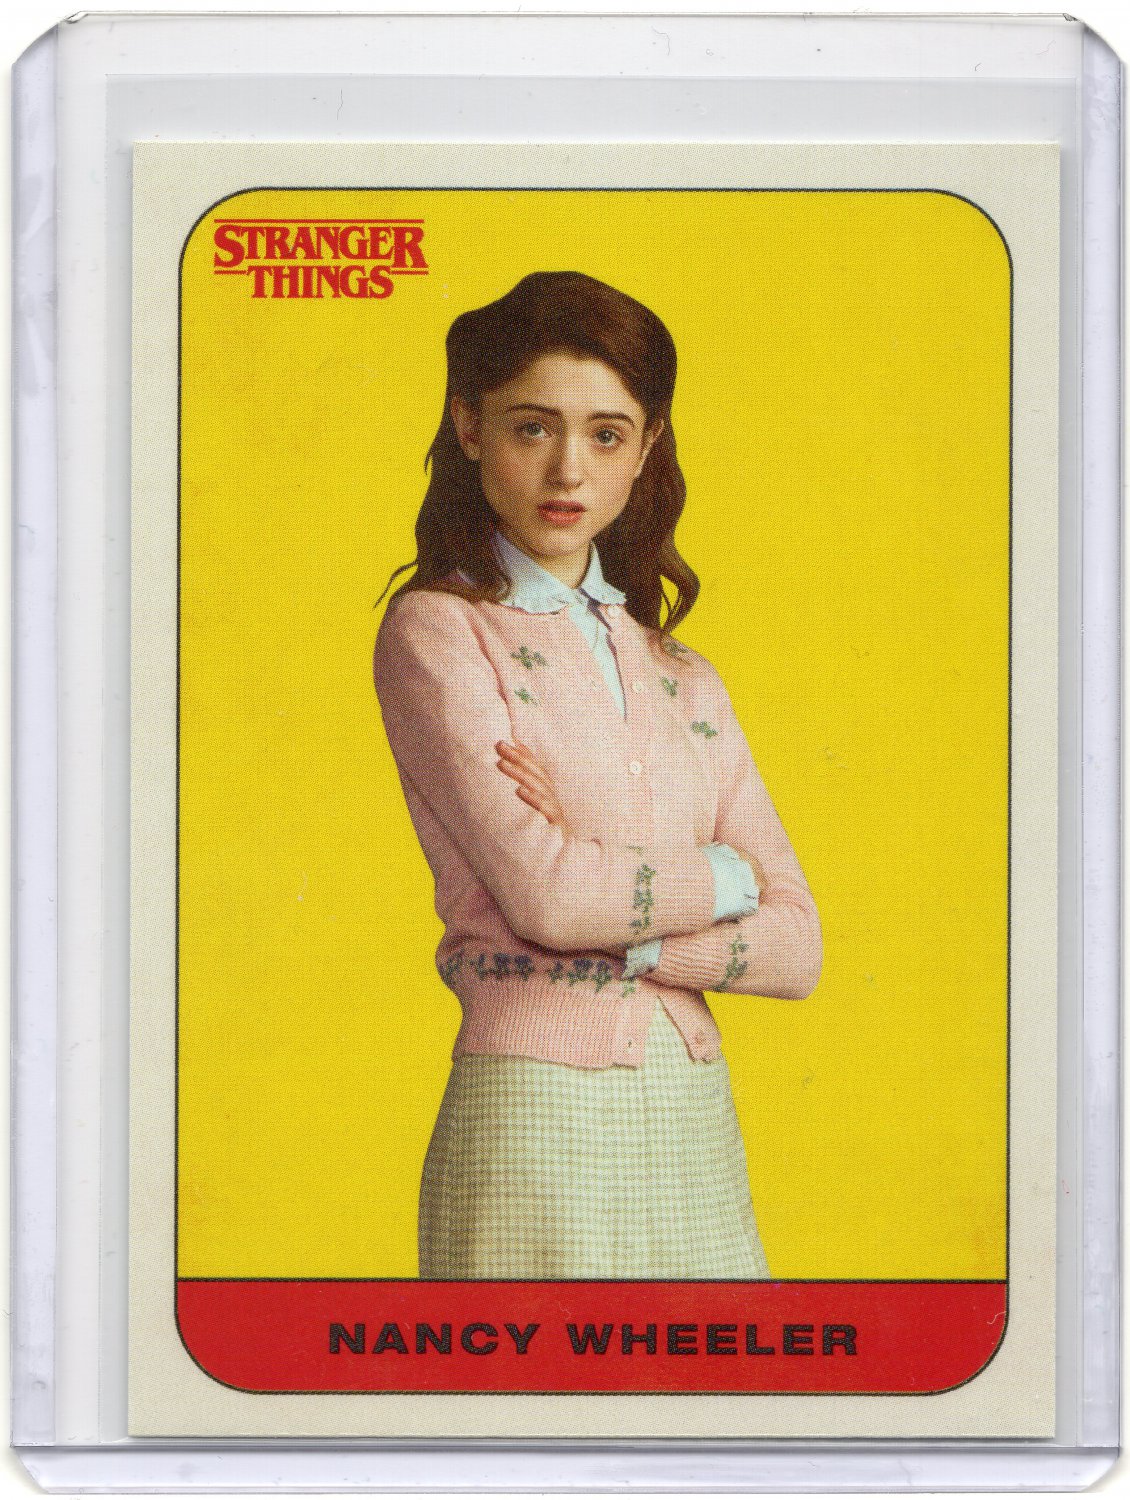 Nancy wheeler sticker